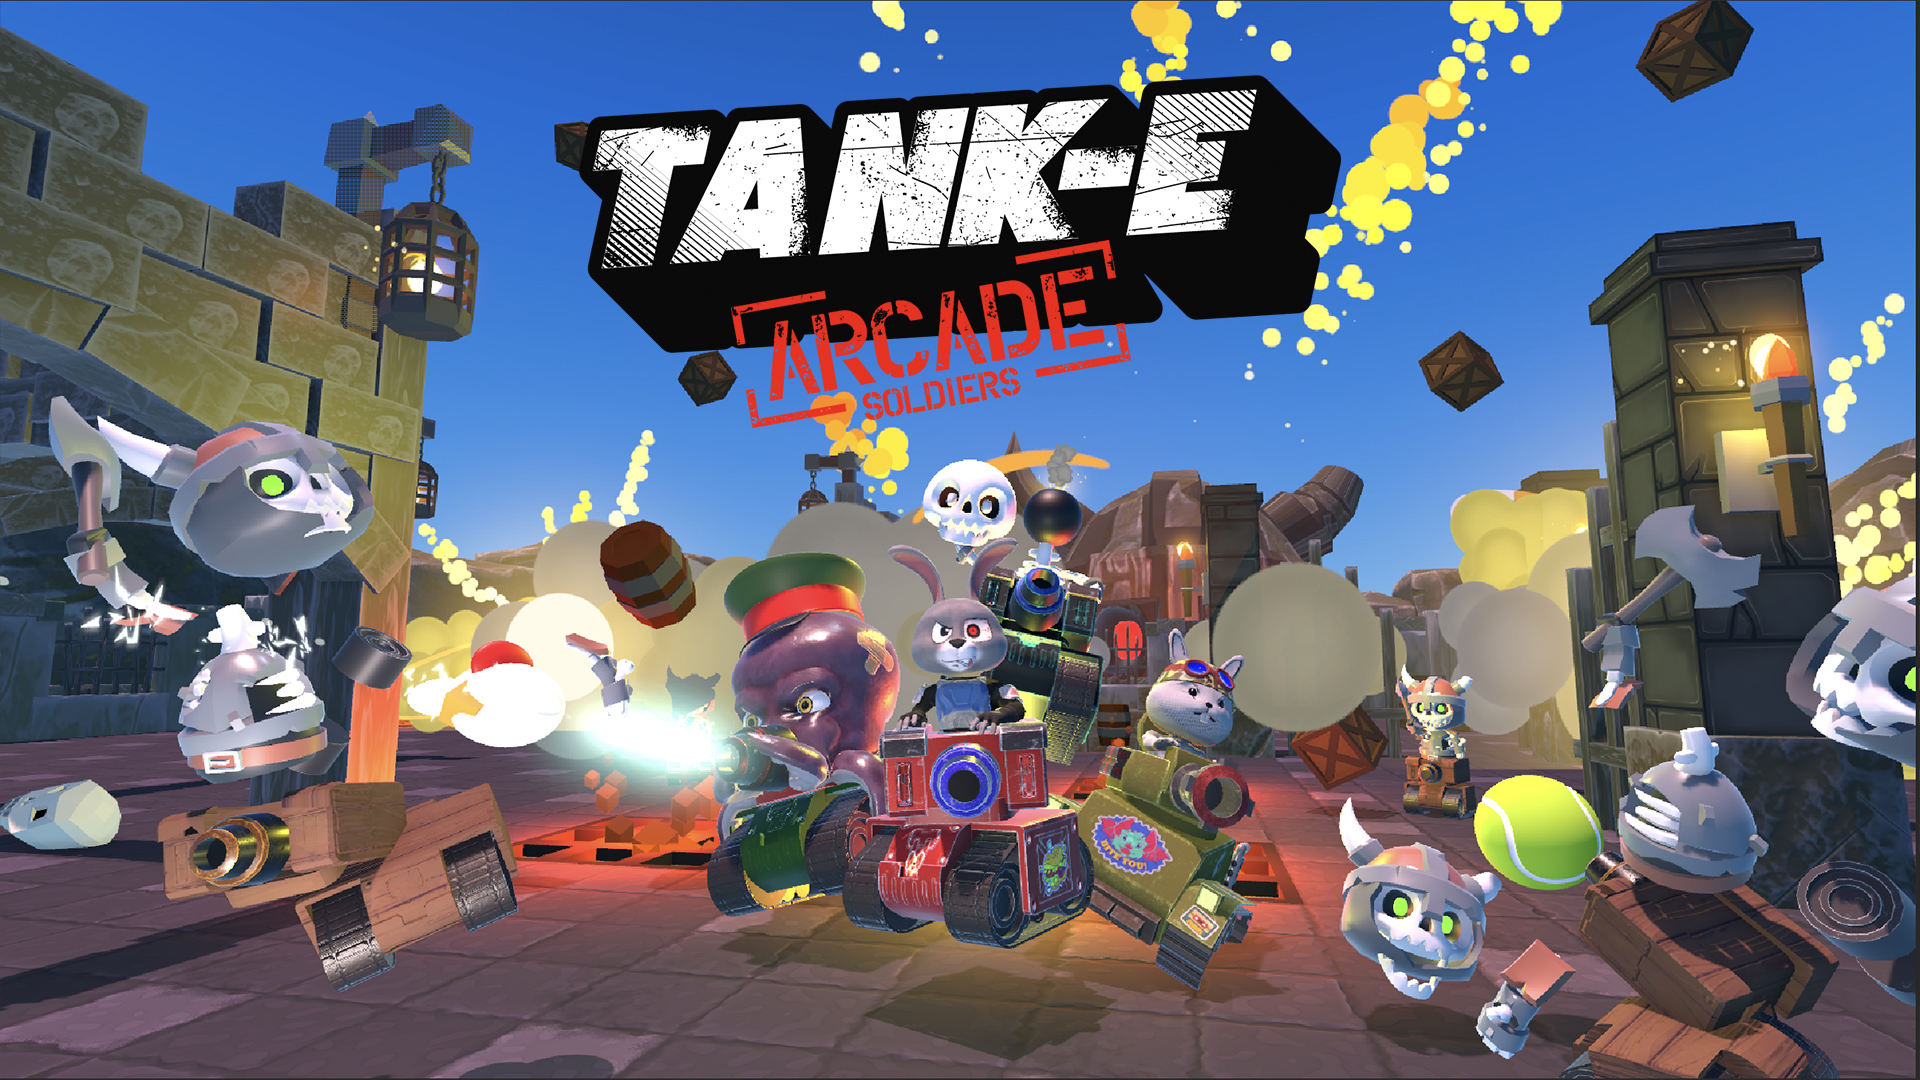 TANK-E Arcade Soldiers